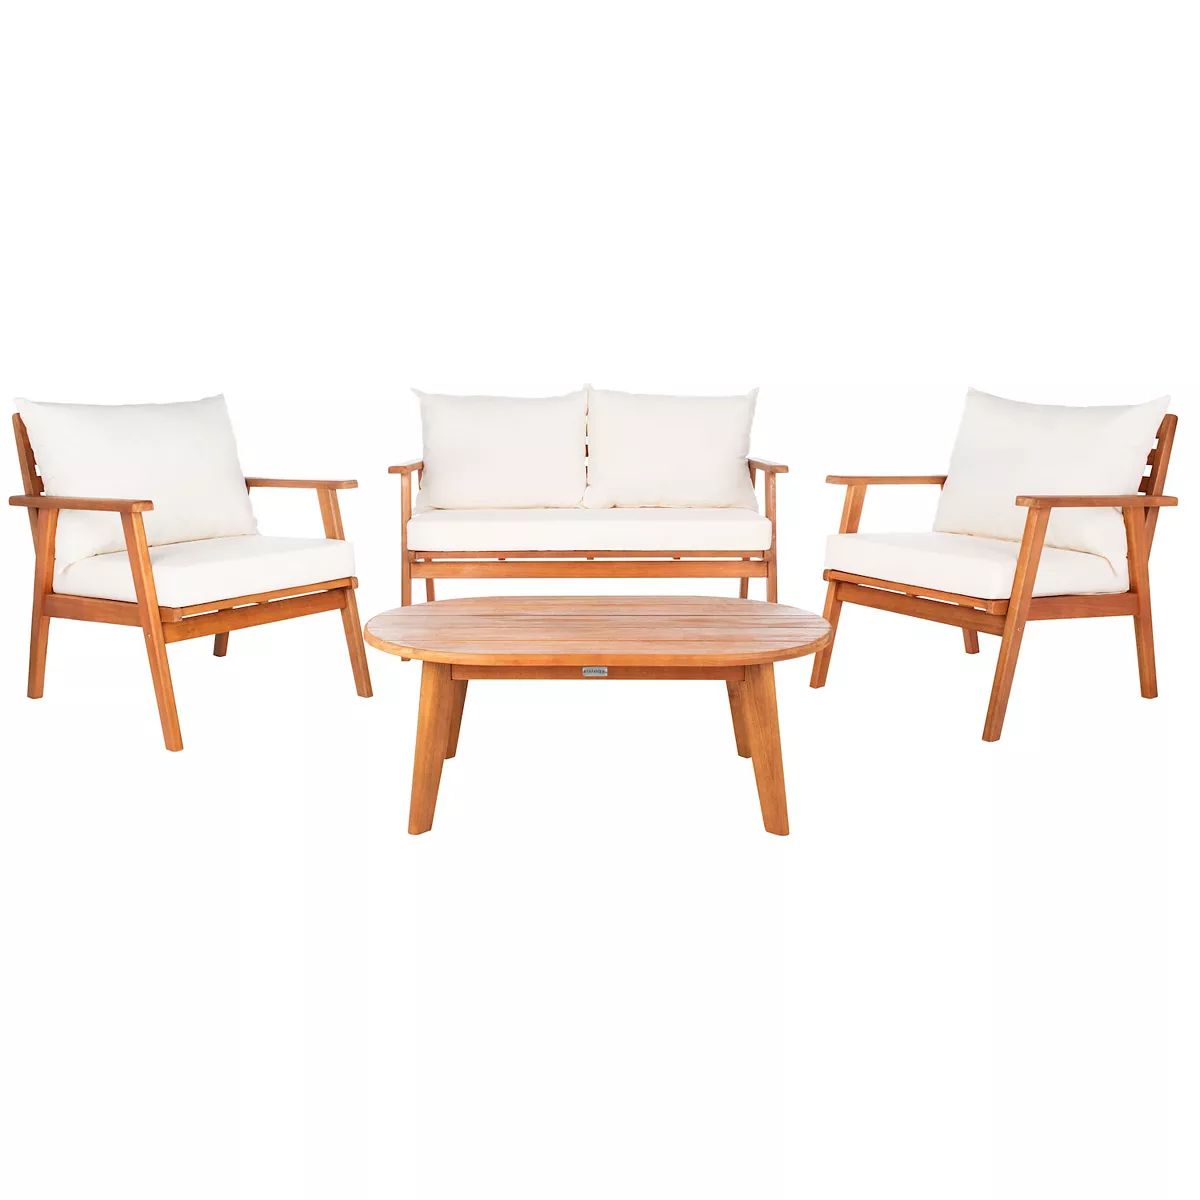 Safavieh Deacon Loveseat, Chair & Coffee Table Patio 4-piece Set | Kohl's